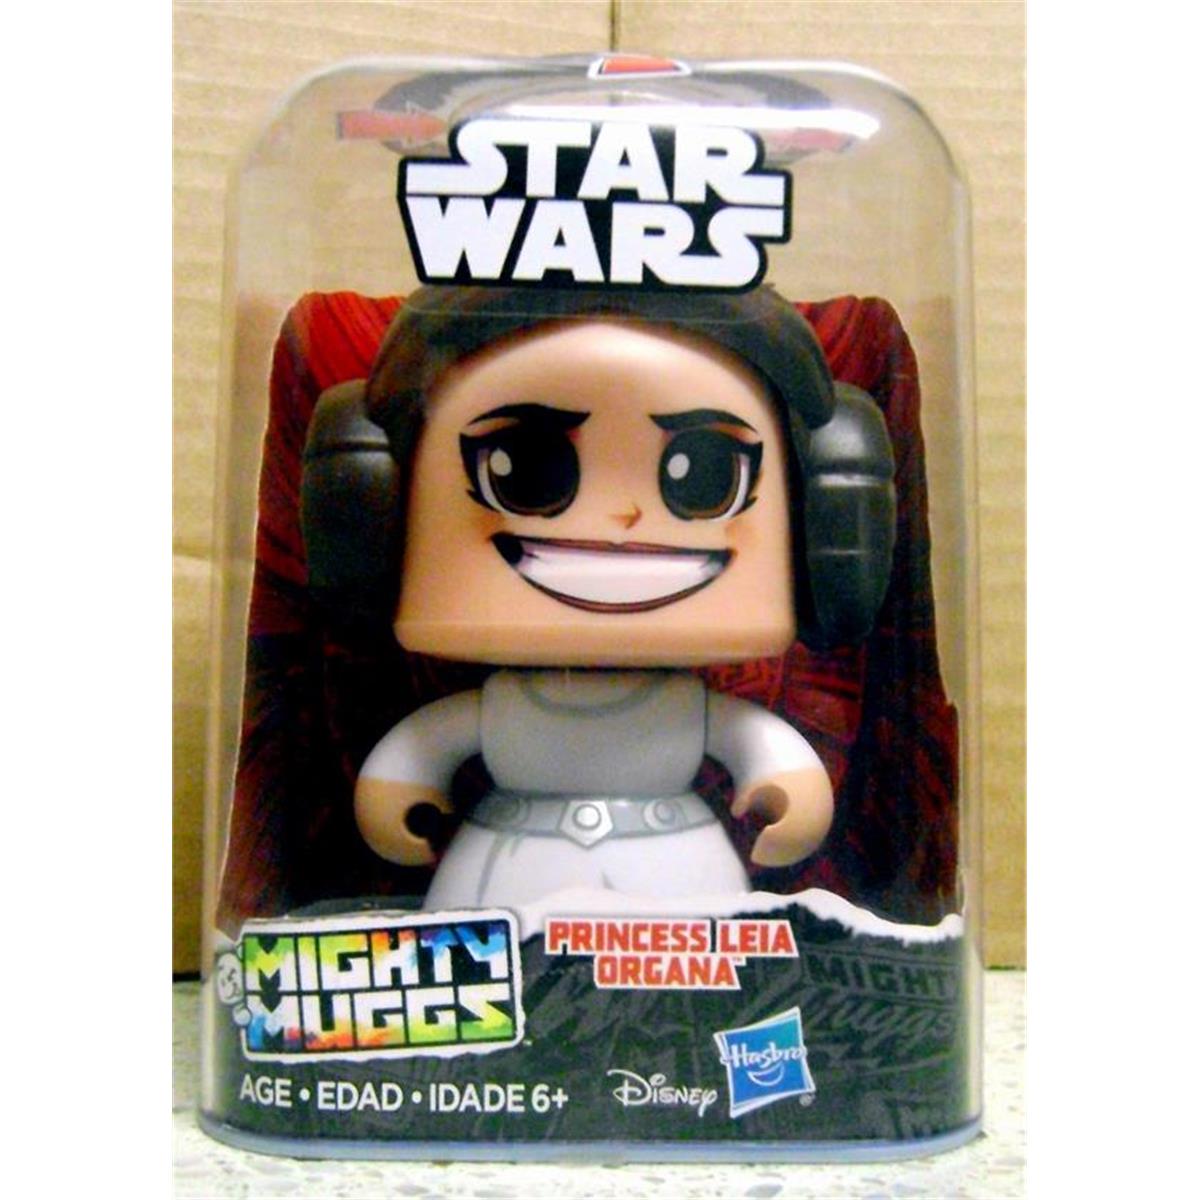 Picture of Autograph Warehouse 637317 3 x 4 in. Princess Leia Organa Star Wars Toy - Mighty Muggs 04 Hasbro Disney NIB